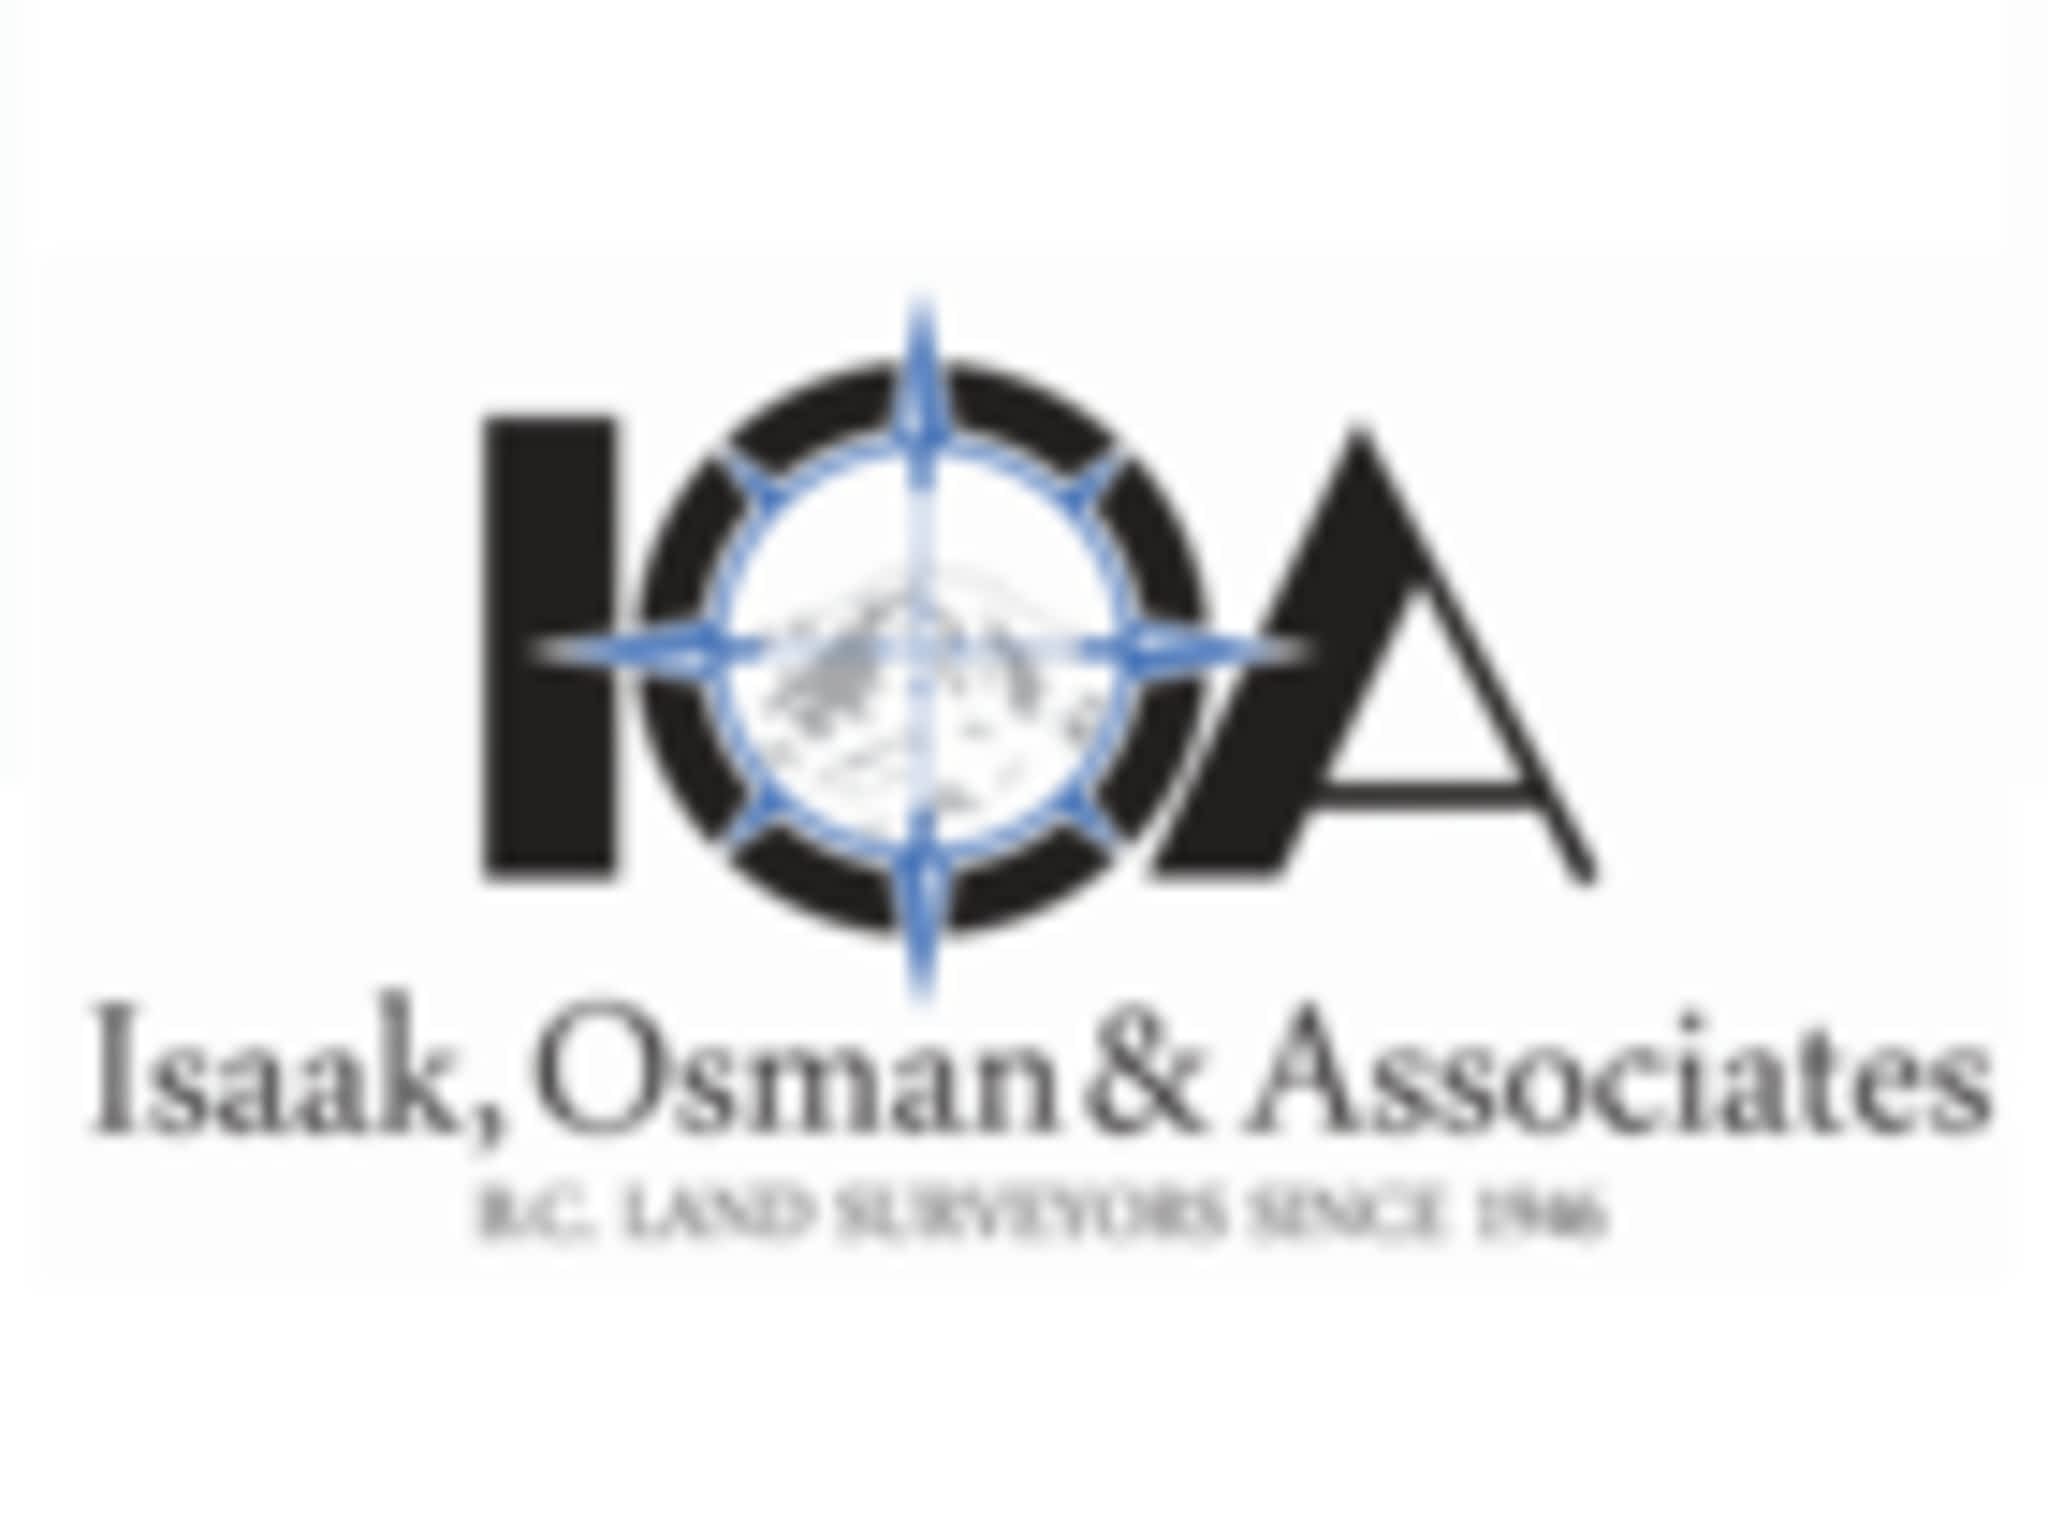 photo Isaak Osman & Associates BC Land Surveyors